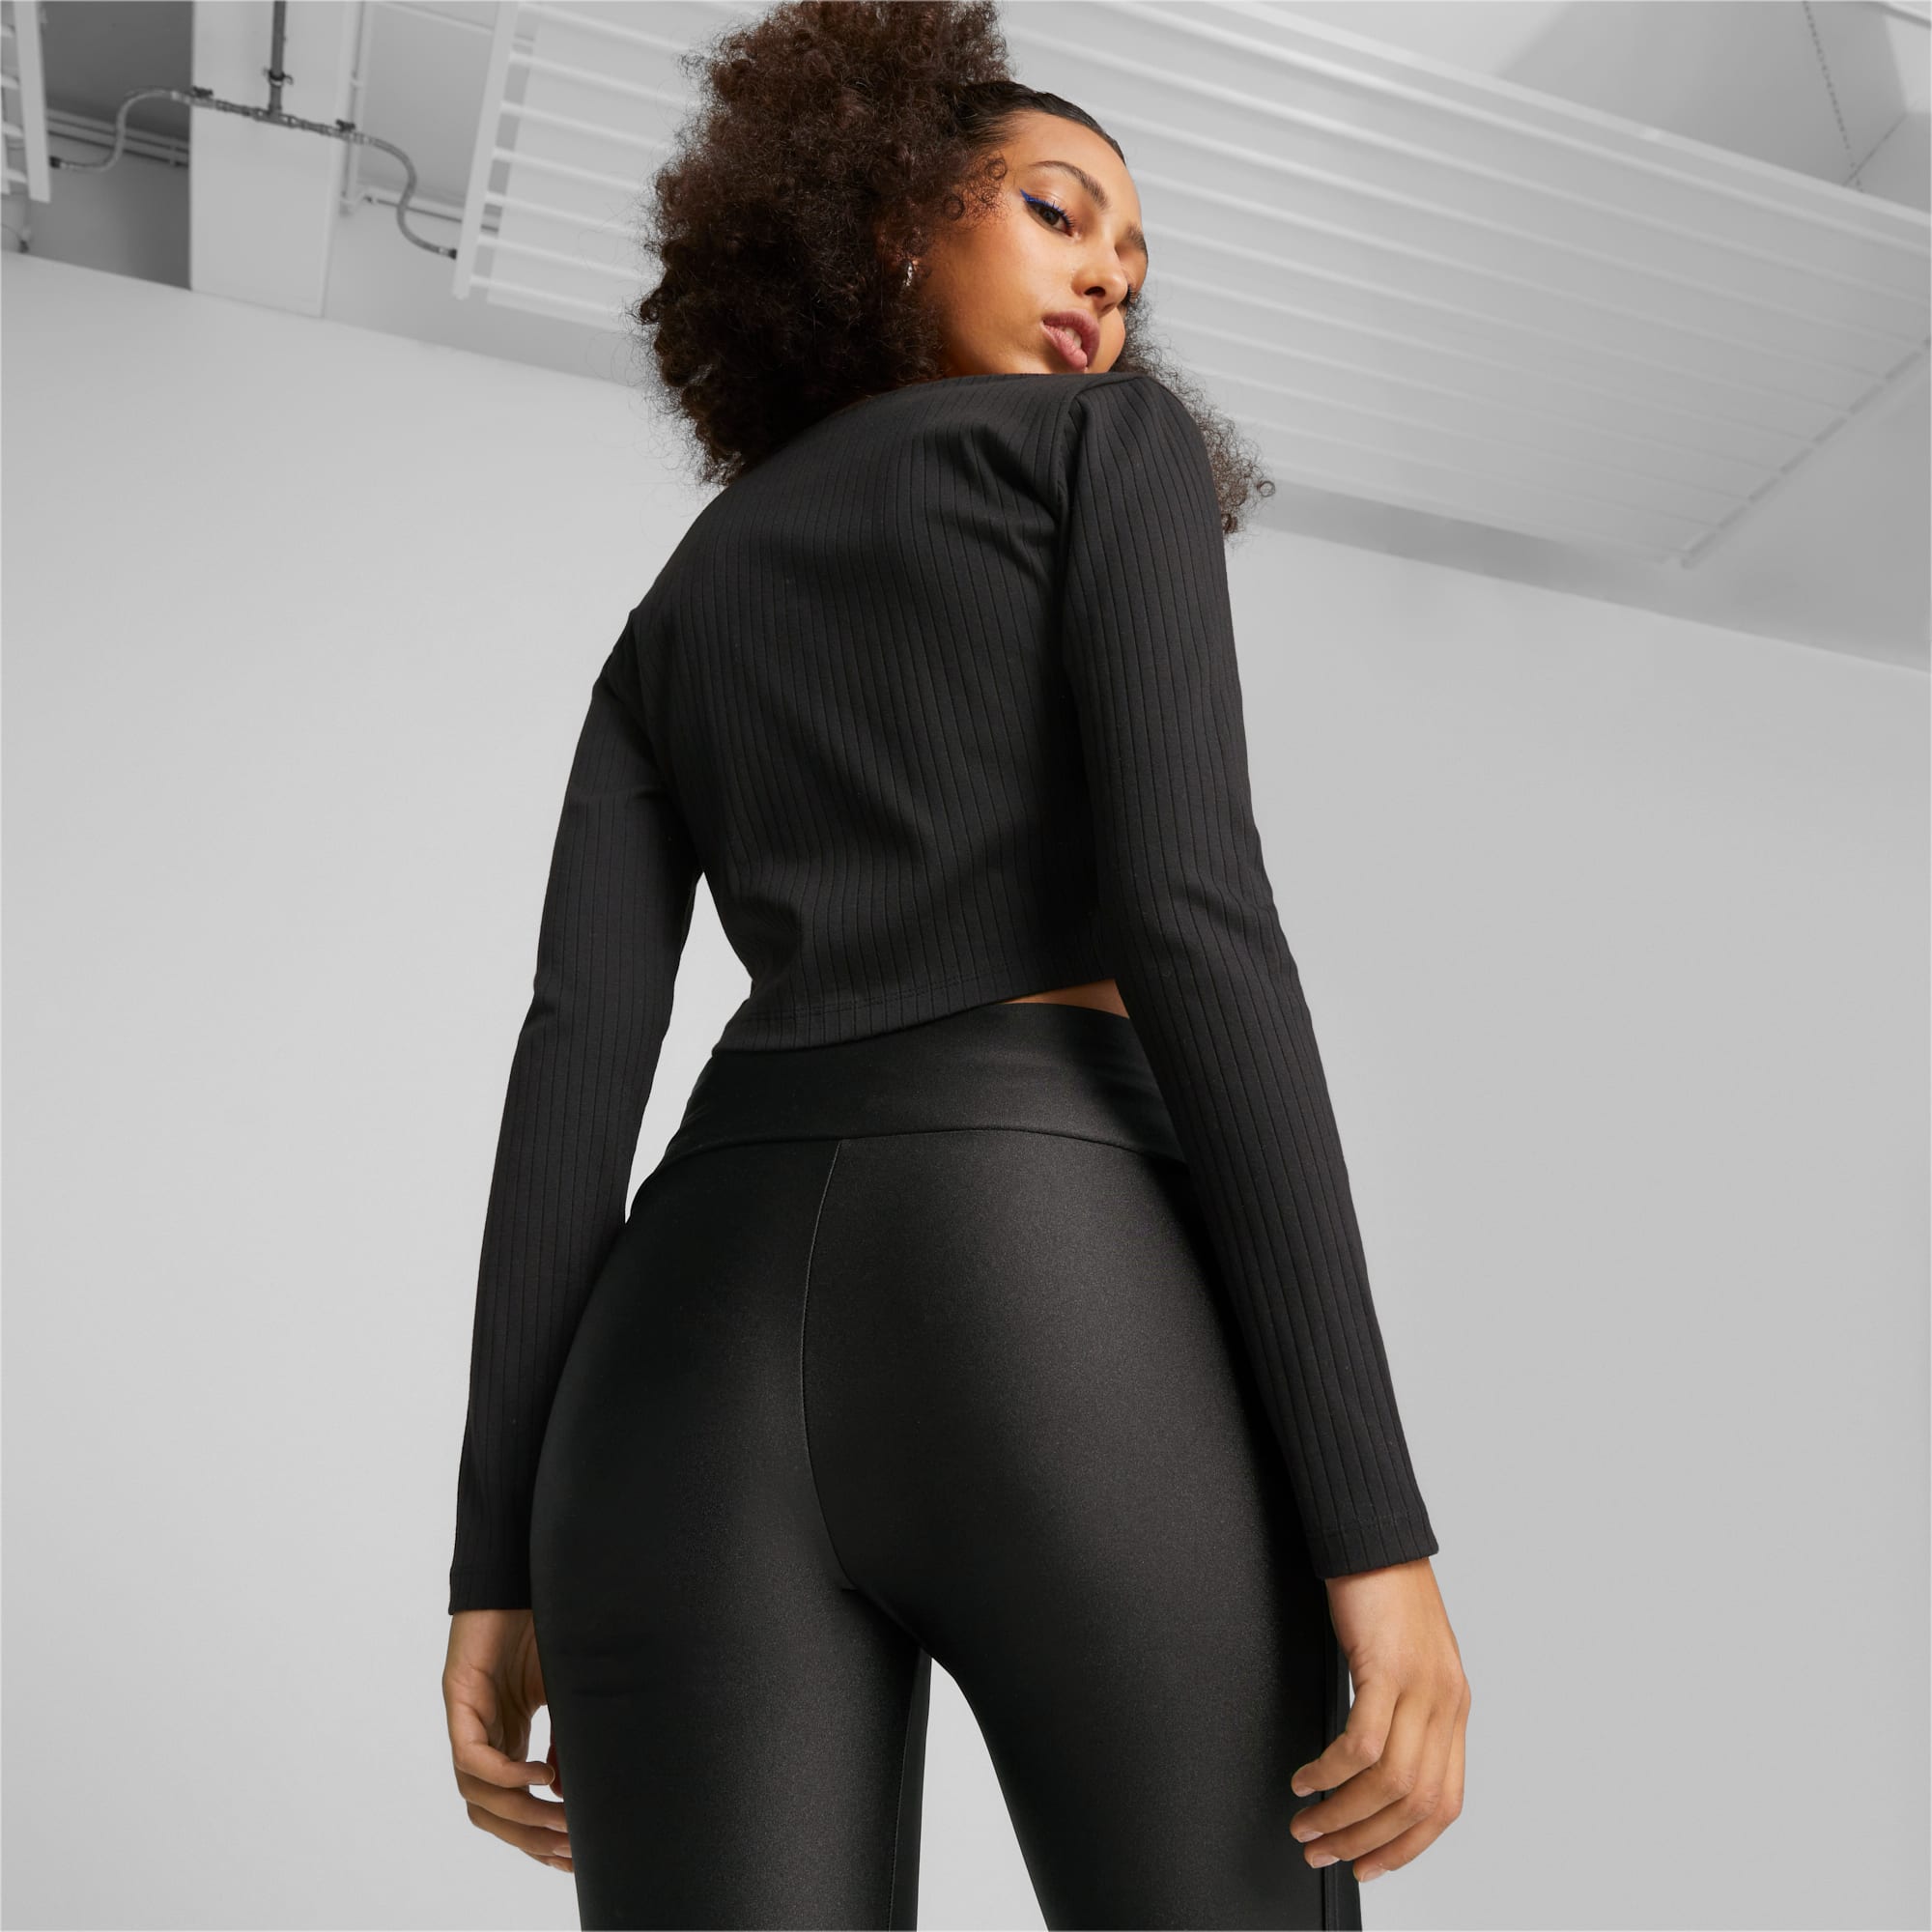 PUMA Classics Women's Ribbed Long Sleeve Shirt, Black, Size XL, Clothing